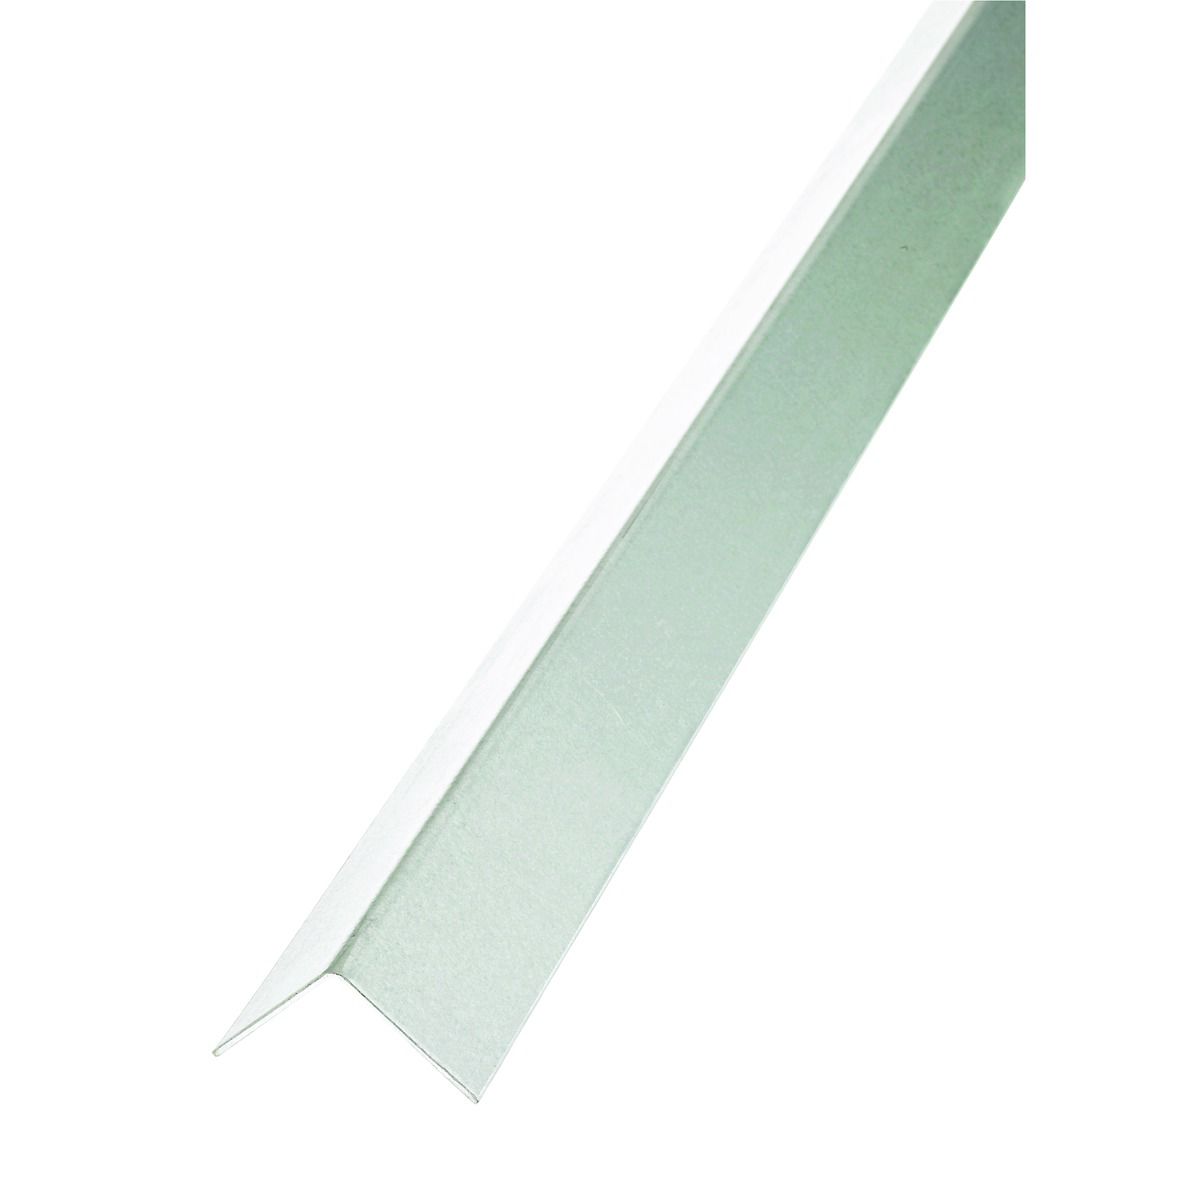 Image of Wickes 35.5mm Angle - Galvanised Steel 1m